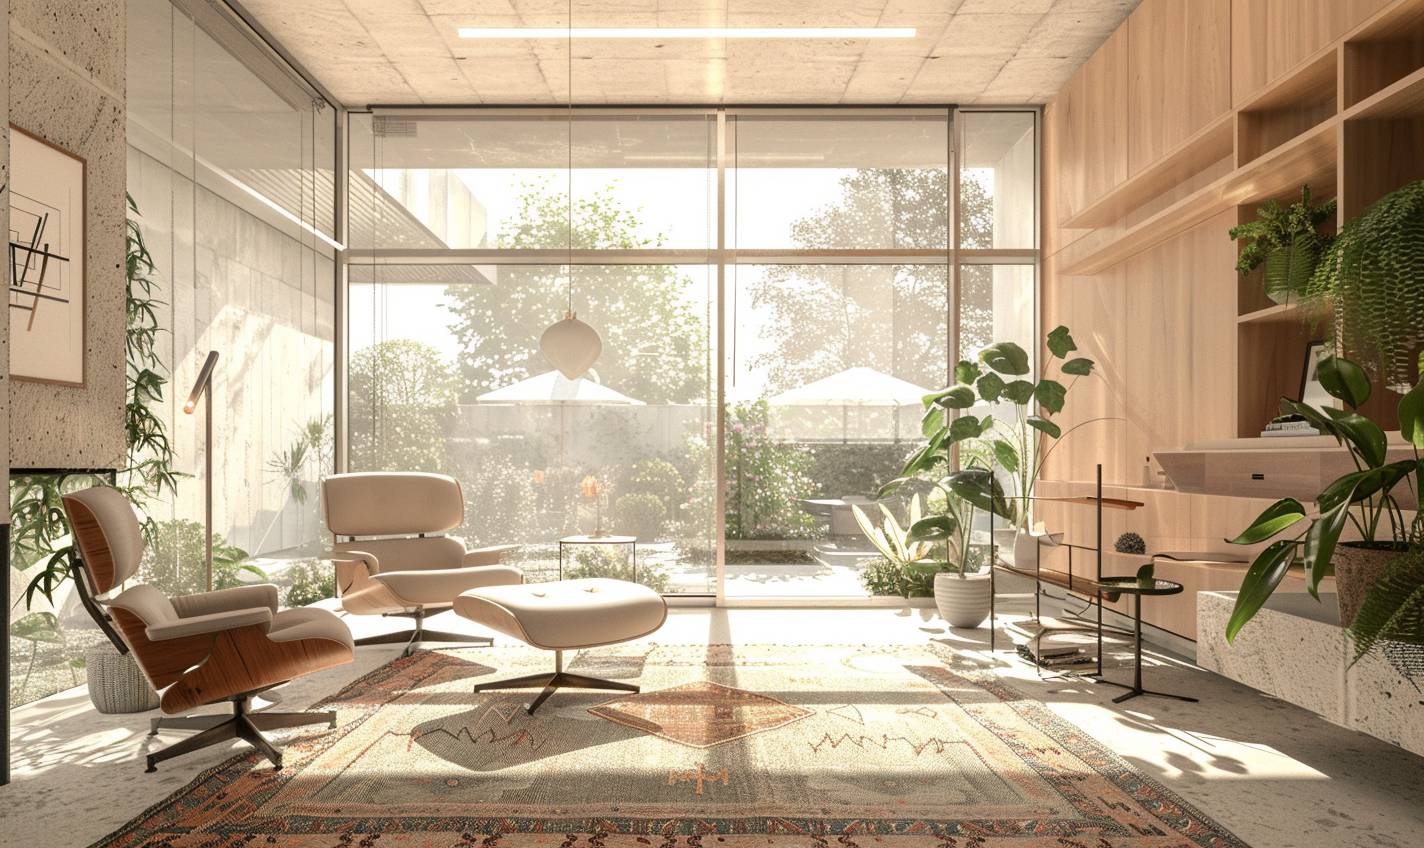 Interior Design, a perspective of study, modernist, large windows with abundant natural light, light colors, plants, modern furniture, modern interior design